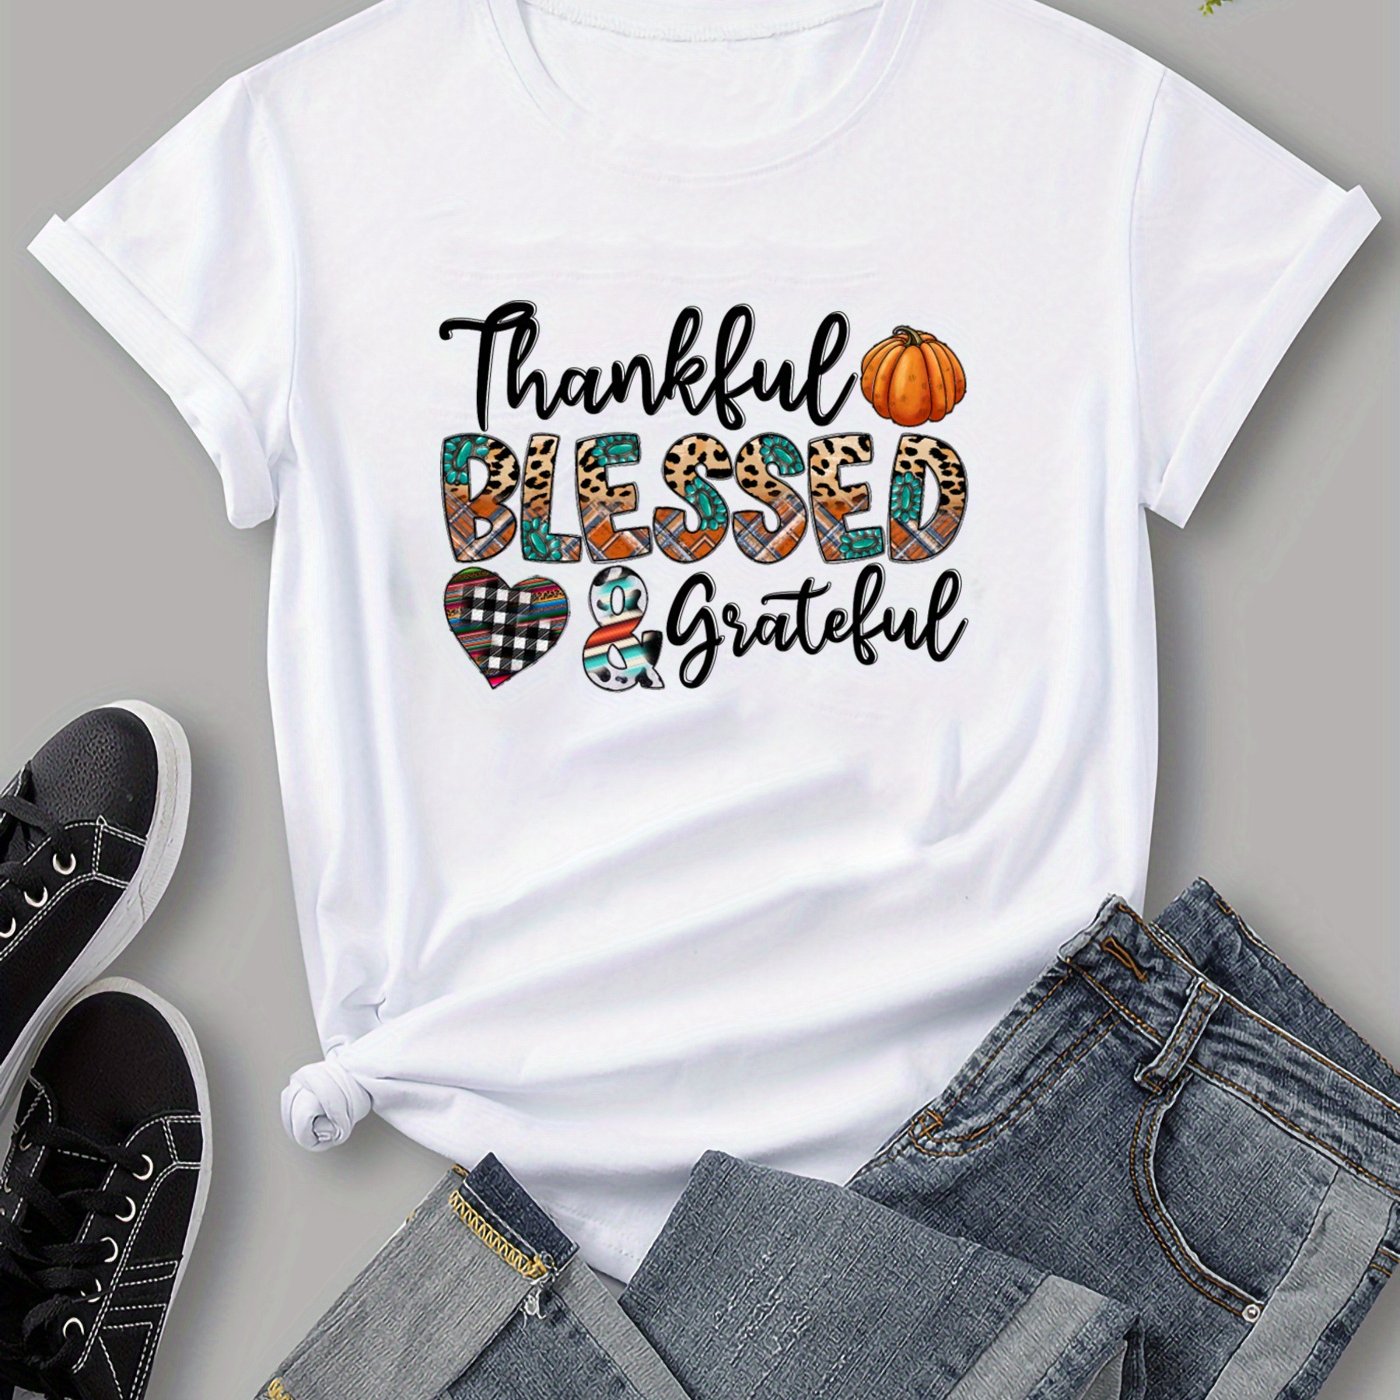 Thankful Blessed & Grateful Women's Christian T-shirt claimedbygoddesigns